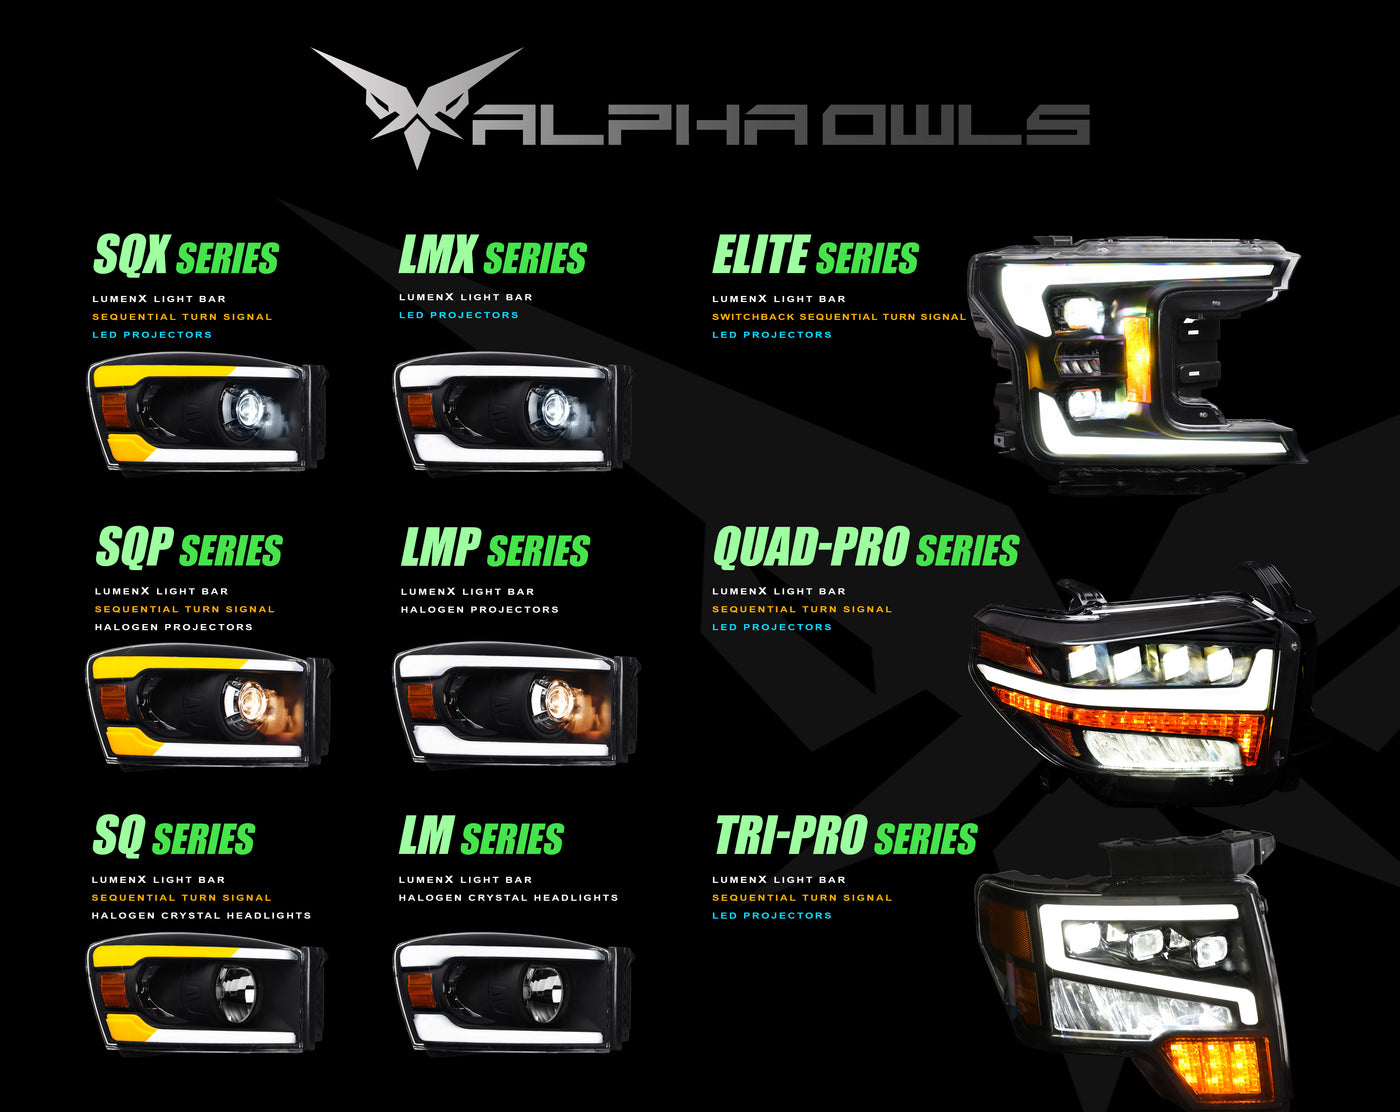 Alpha Owls Headlights, Alpha Owls Chevy Headlights, Chevy 2007-2013 Headlights, Chevy Silverado 1500 Headlights, Headlights, Chrome housing Headlights